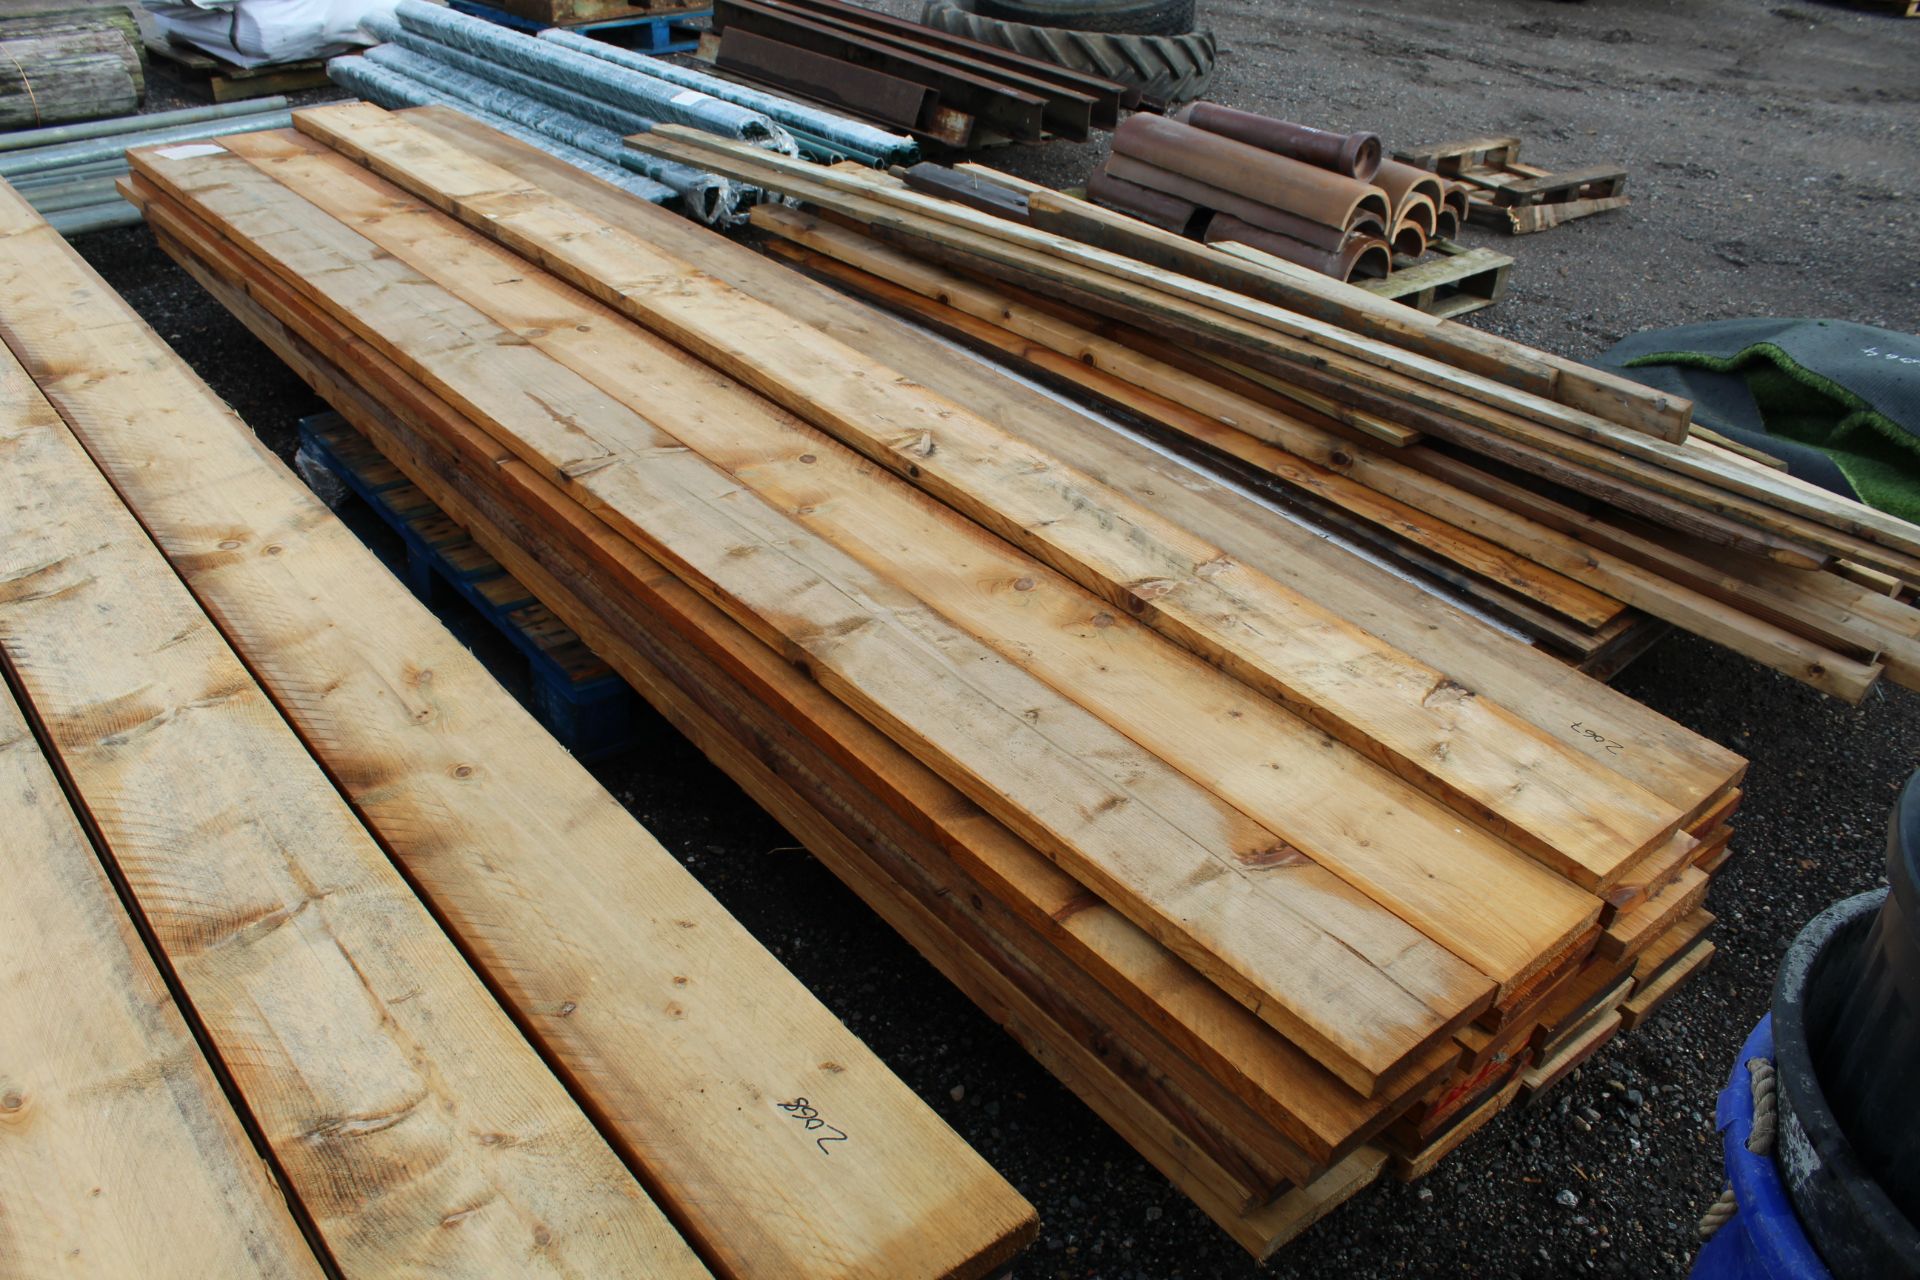 28x 3.9m x 22cm x 3.5cm scaffold boards.